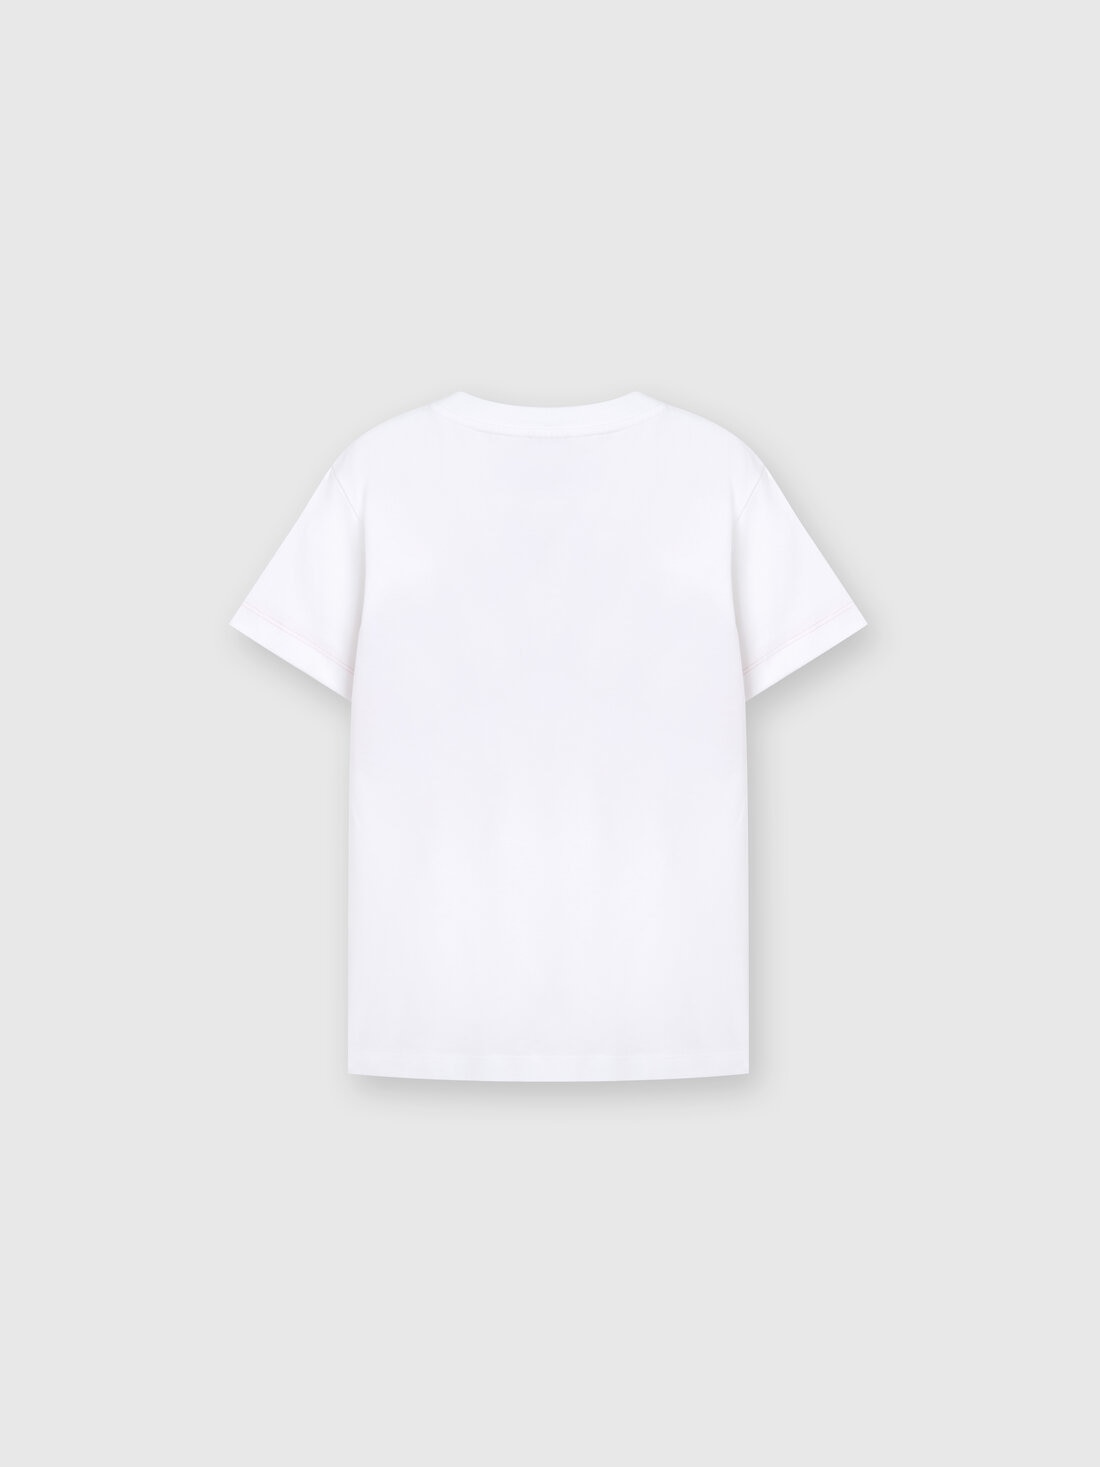 Cotton jersey T-shirt with chevron logo lettering , Multicoloured  - KS24SL04BV00FVS019C - 1